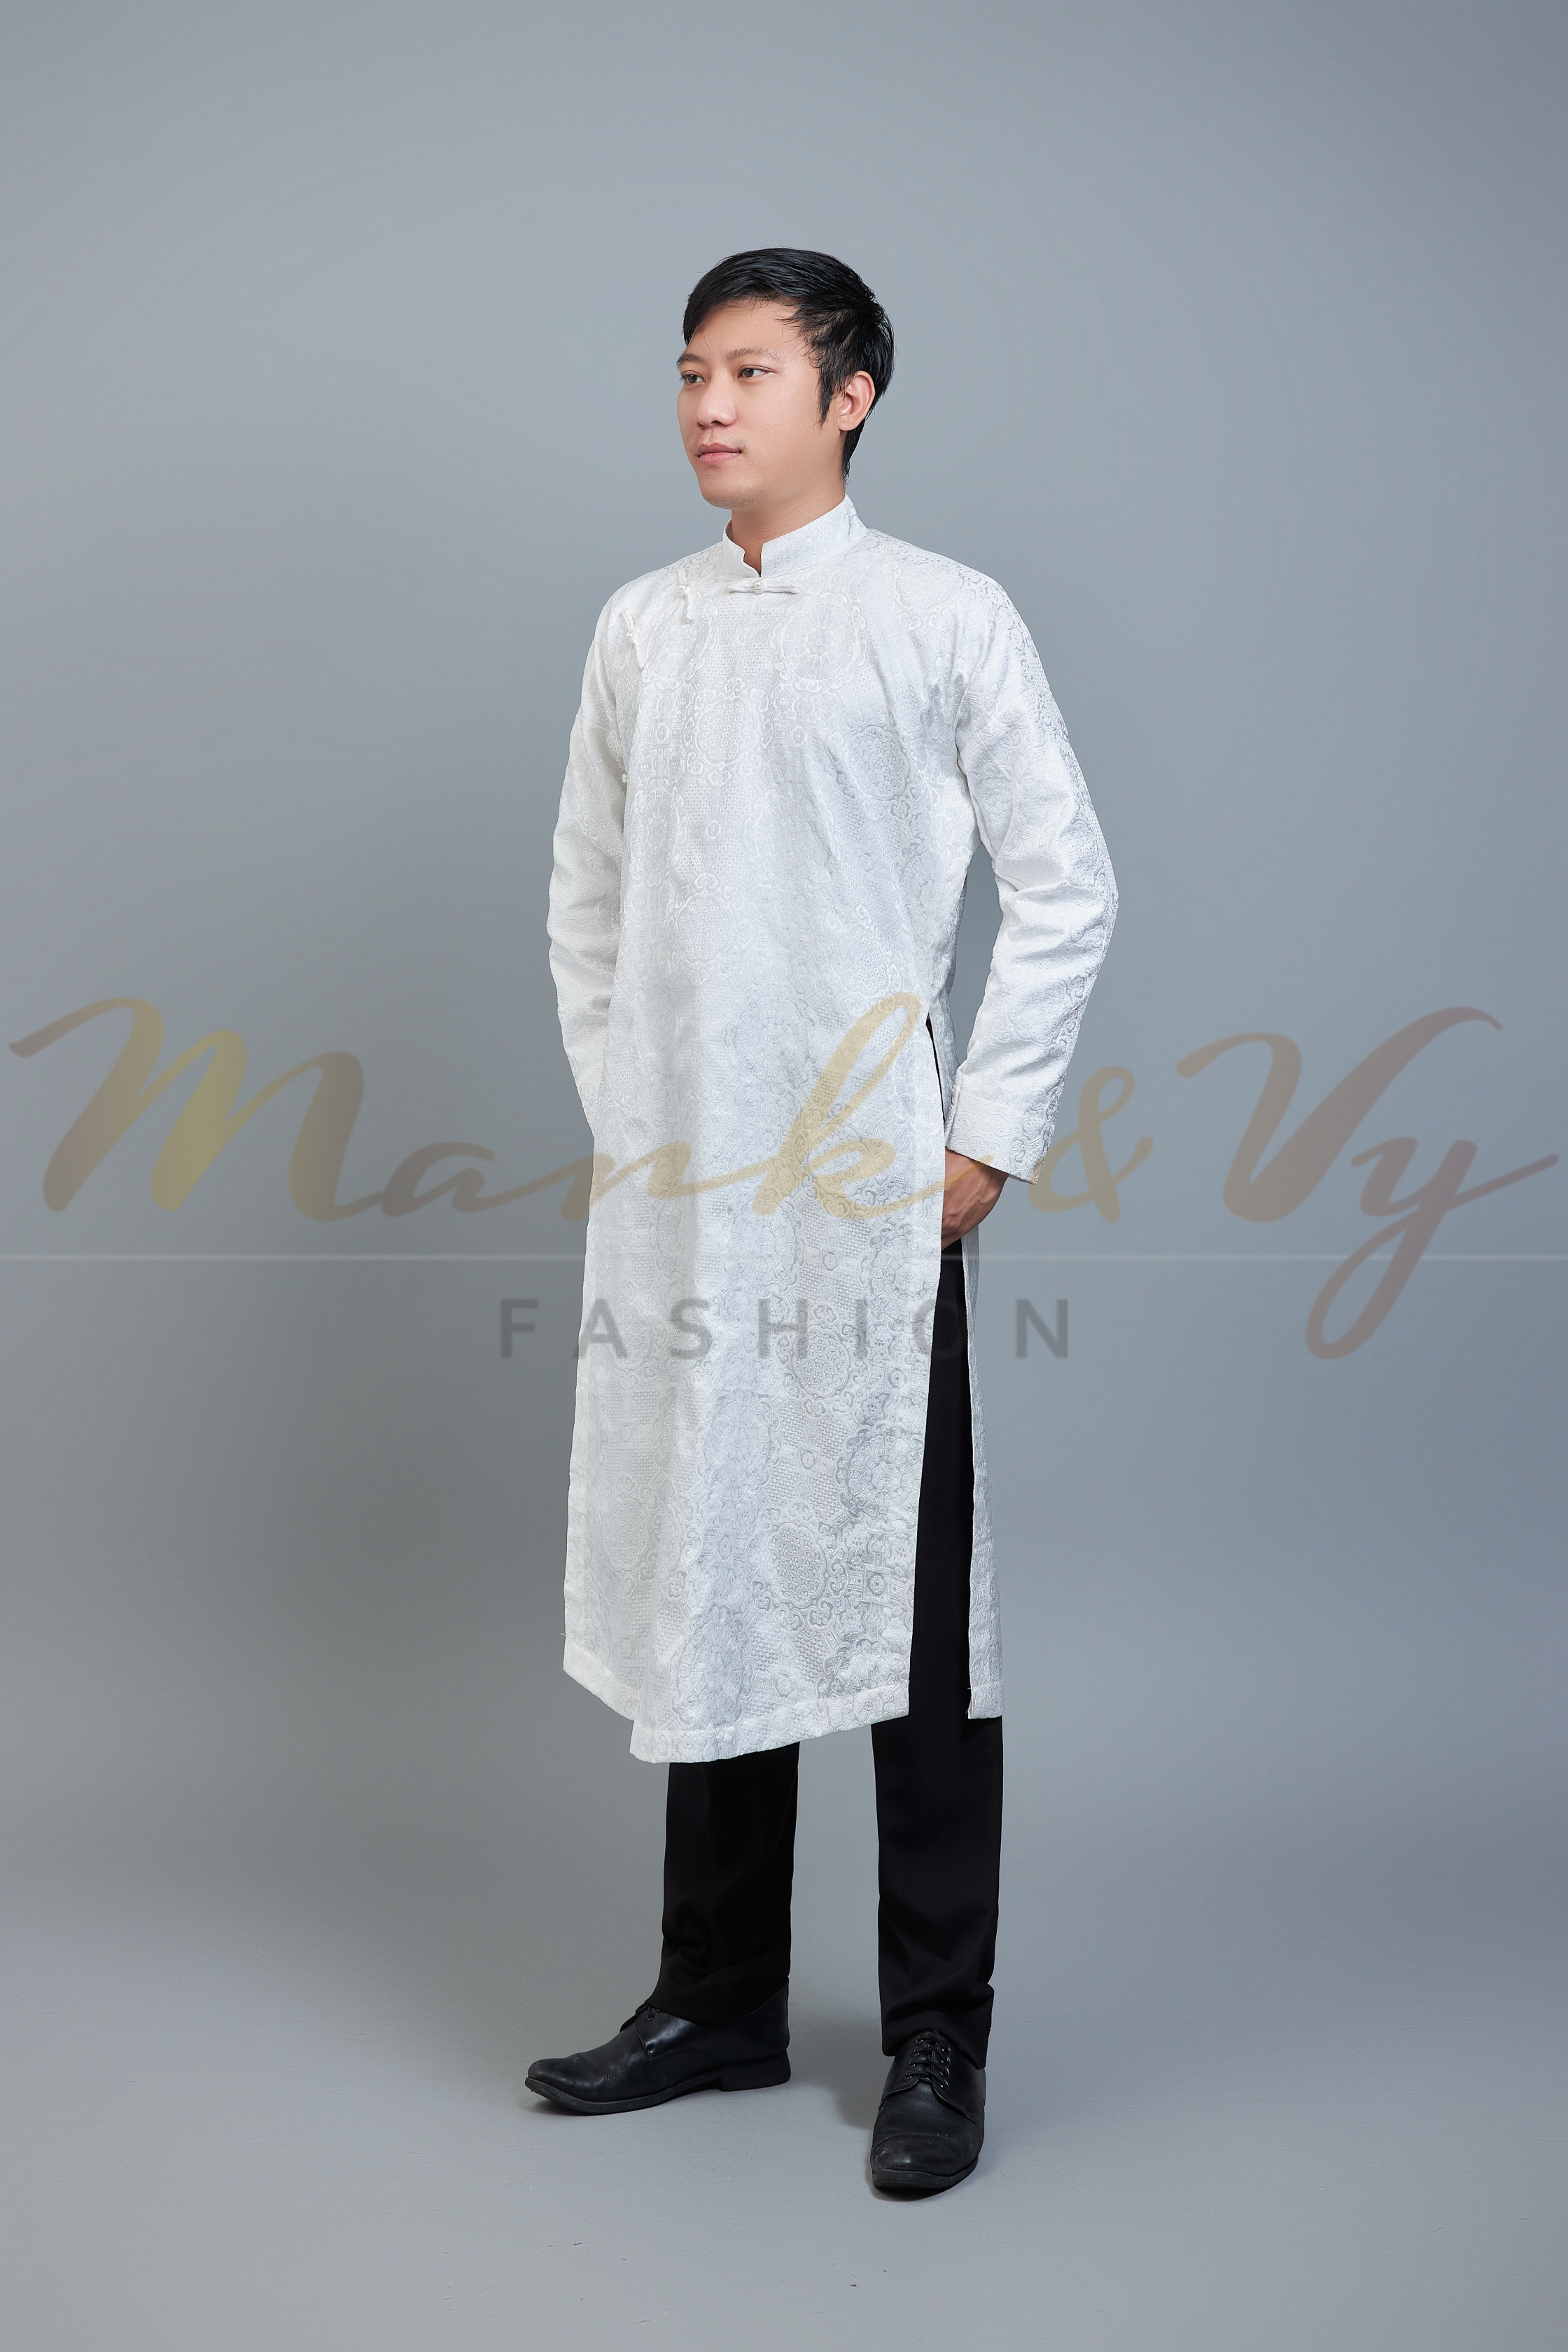 Men's ao dai in white - Vietnamese national clothing. Free custom